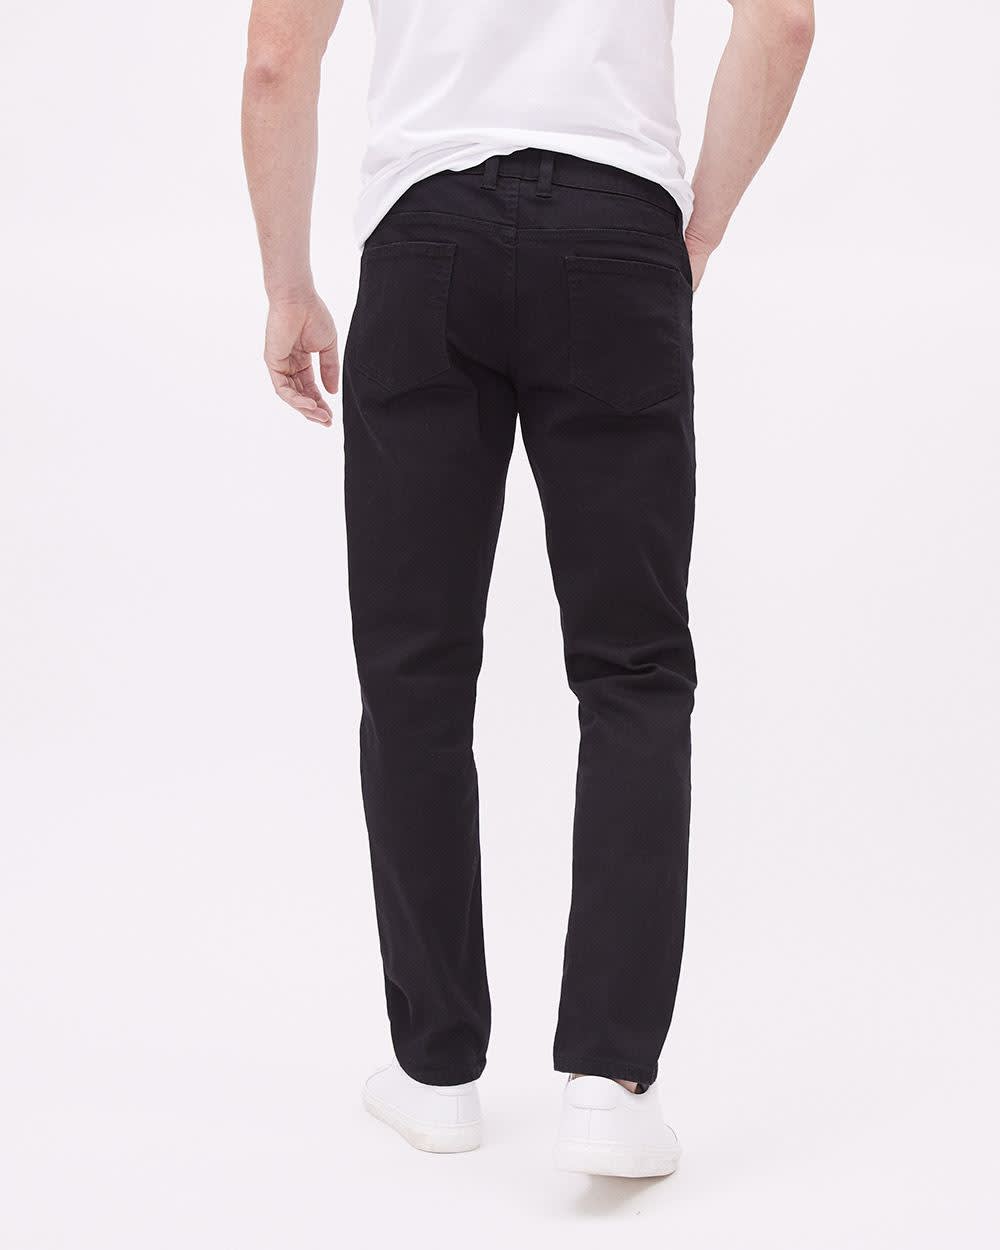 Modal Stretch 5-Pocket Pants | RW&CO.